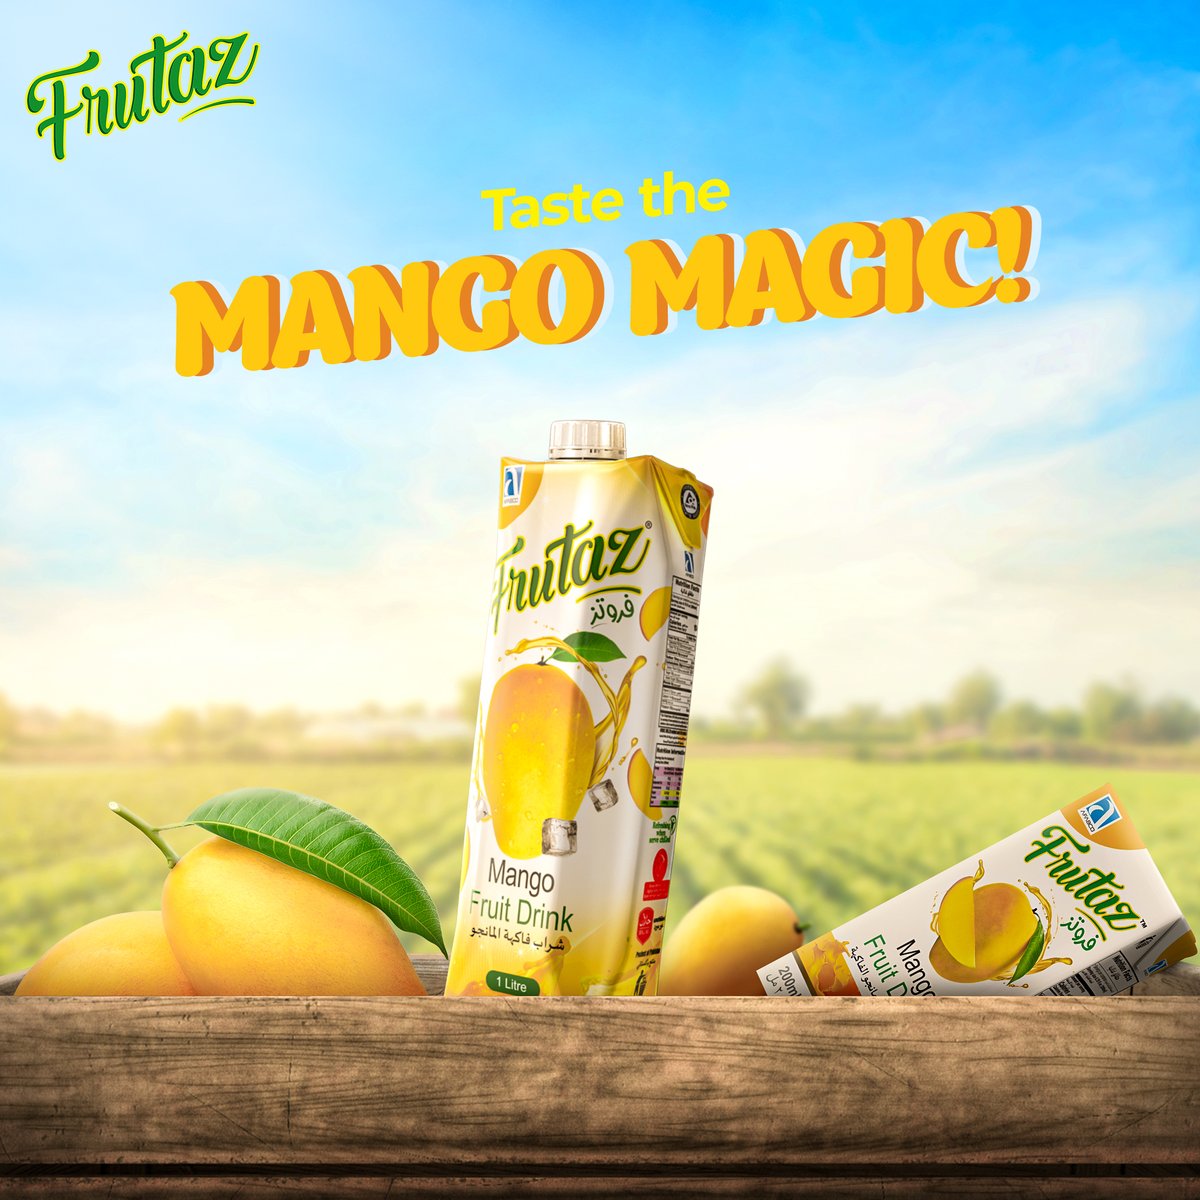 Pure Mango Goodness in Every Sip!

#Frutaz #MangoJuice #Mango #RefreshingDelight #JuicyGoodness #ThirstQuencher #TropicalTreat #PureRefreshment #FruitfulIndulgence #SipofSummer